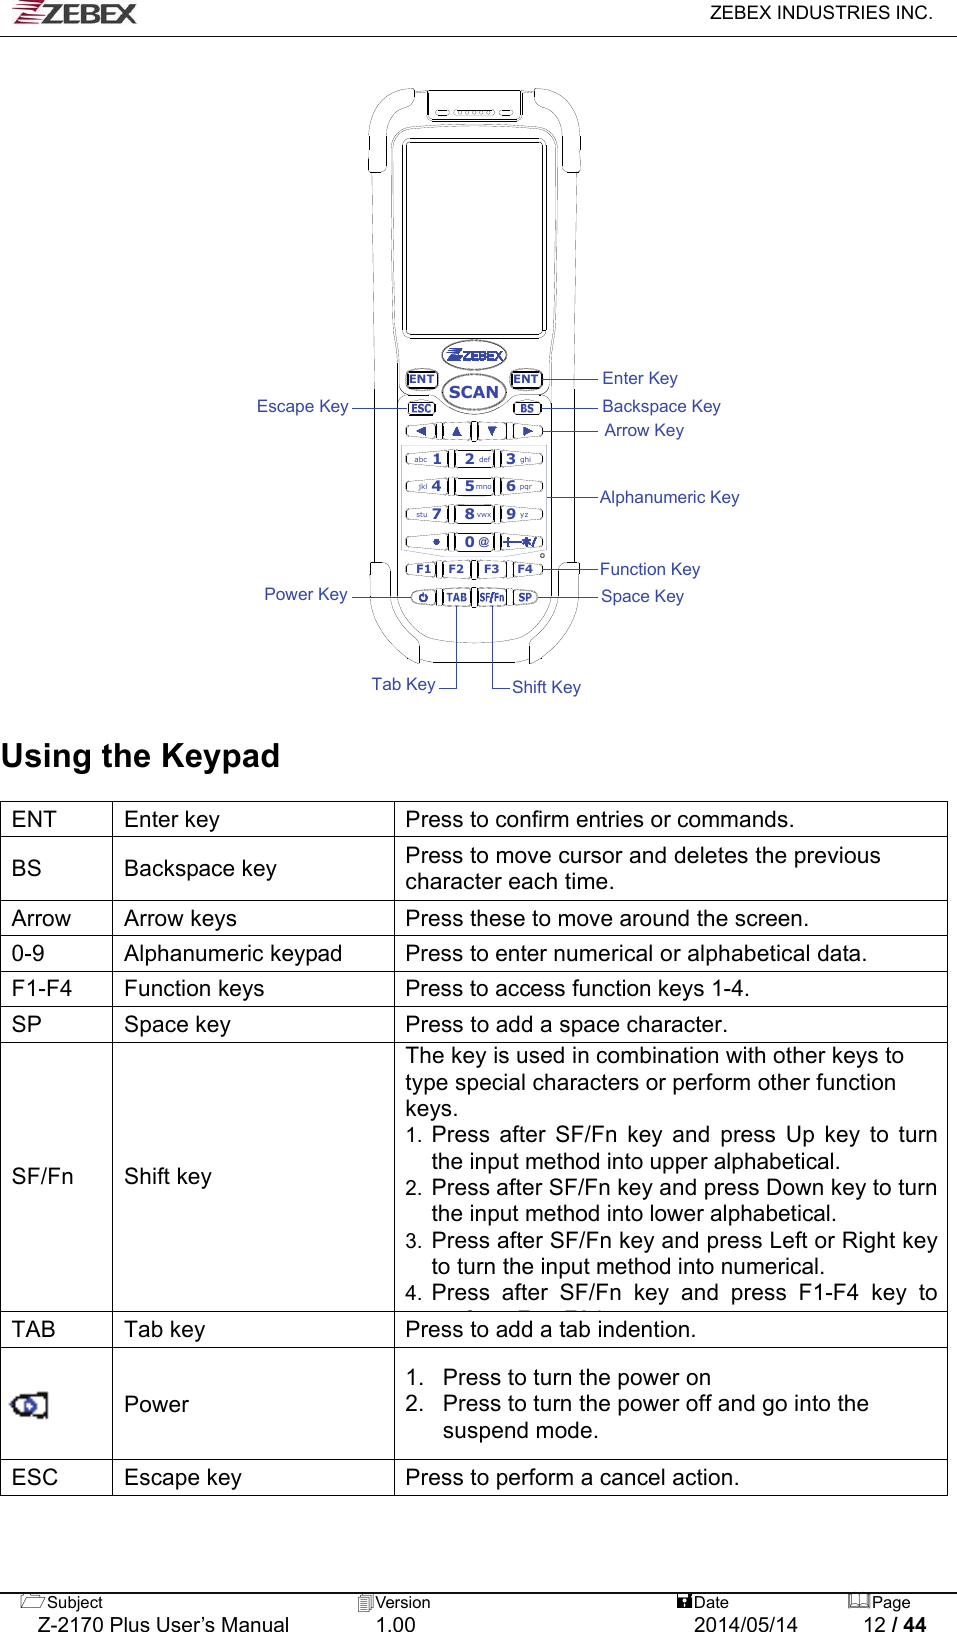   ZEBEX INDUSTRIES INC.  Subject  Version   DatePage   Z-2170 Plus User’s Manual  1.00  2014/05/14  12 / 44 ENTENT0F1 F2 F4F32def 3ghiabc 1vwx8stu 79yzmno4jkl 5pqr6SCAN@Backspace KeyArrow KeyEscape KeySpace KeyTab KeyPower KeyShift KeyEnter KeyFunction KeyAlphanumeric Key                                Using the Keypad ENT Enter key Press to confirm entries or commands. BS Backspace key  Press to move cursor and deletes the previous character each time. Arrow Arrow keys Press these to move around the screen. 0-9 Alphanumeric keypad Press to enter numerical or alphabetical data. F1-F4 Function keys Press to access function keys 1-4. SP  Space key  Press to add a space character. SF/Fn Shift key The key is used in combination with other keys to type special characters or perform other function keys. 1. Press after SF/Fn key and press Up key to turn the input method into upper alphabetical. 2. Press after SF/Fn key and press Down key to turn the input method into lower alphabetical. 3. Press after SF/Fn key and press Left or Right key to turn the input method into numerical. 4. Press after SF/Fn key and press F1-F4 key to fFF8 kTAB  Tab key  Press   dention.  to add a tab in Power 1.  Press to turn the power on   2.  Press to turn the power off and go into the suspend mode. ESC Escape key  Press to perform a cancel action.  